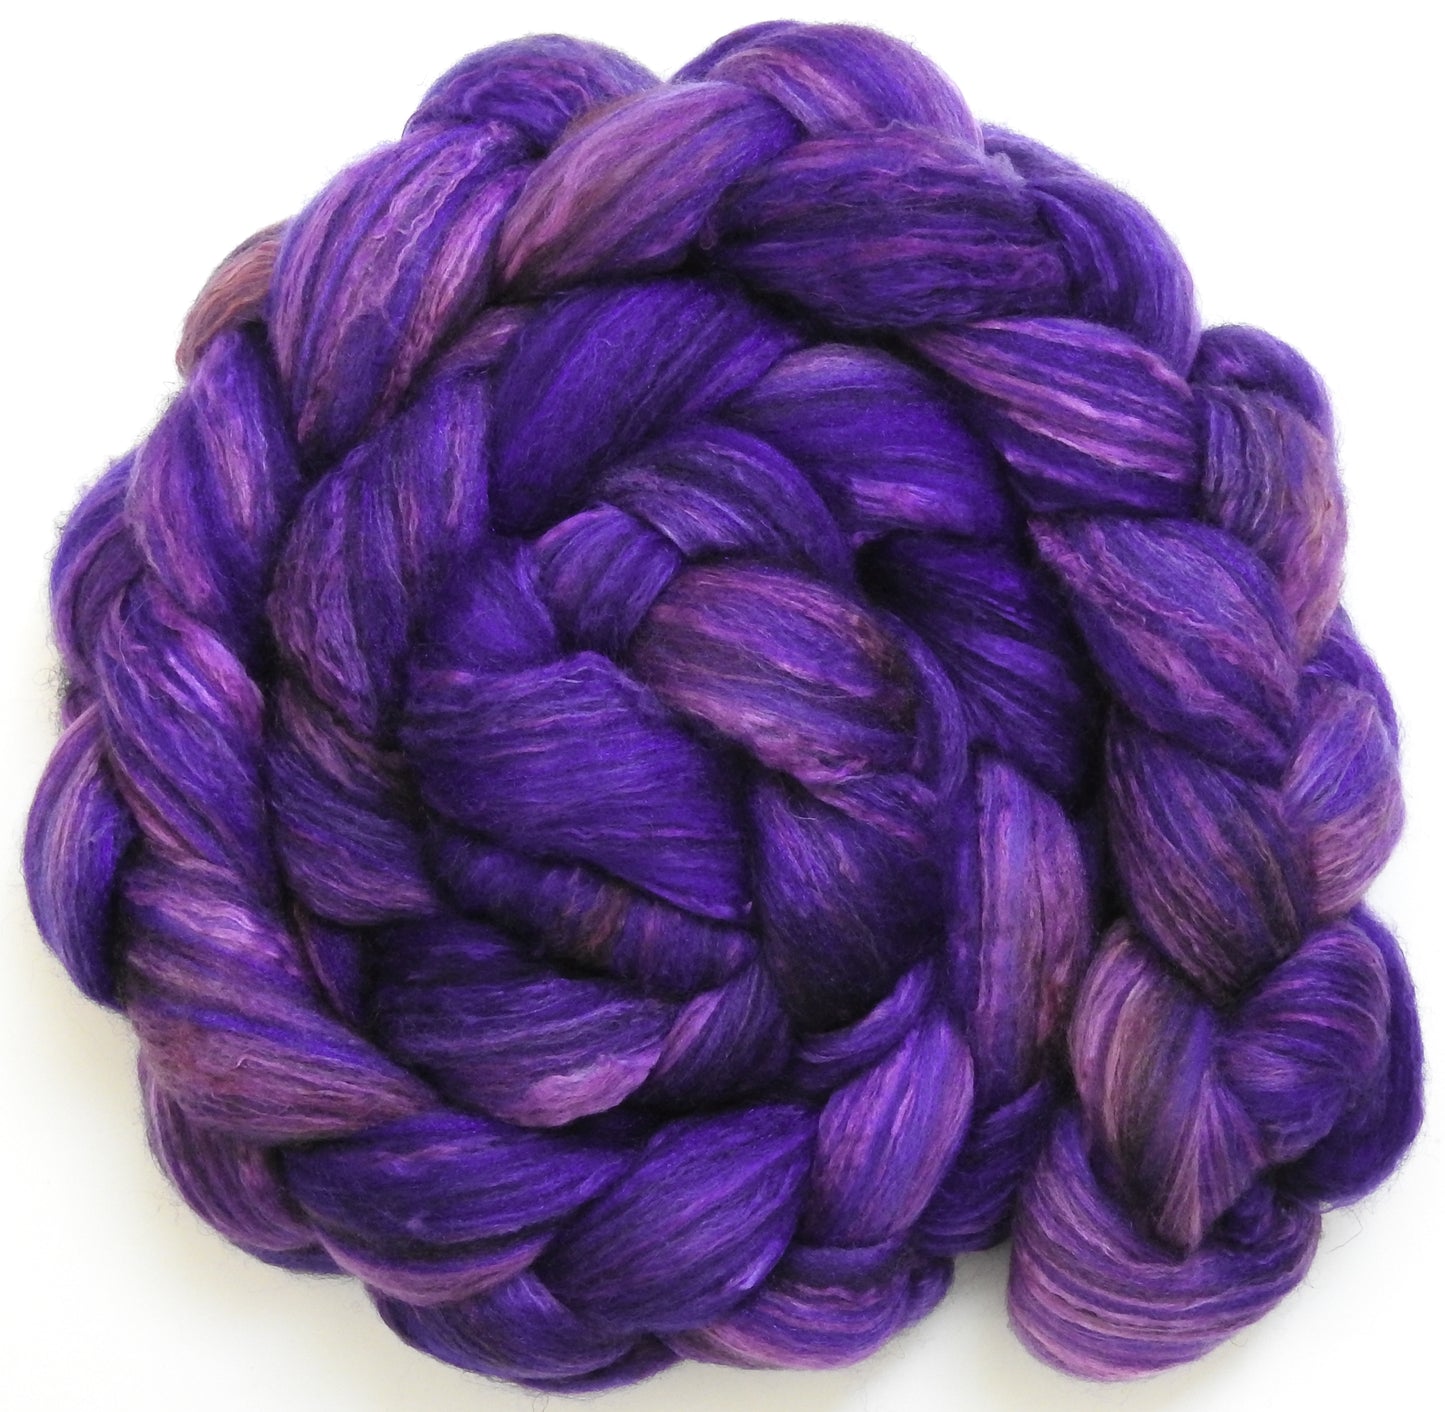 Crushed Velvet (5.5 oz) - Batt in a Braid #7 - Polwarth/ Manx / Mulberry silk/ Firestar (30/30/30/10)